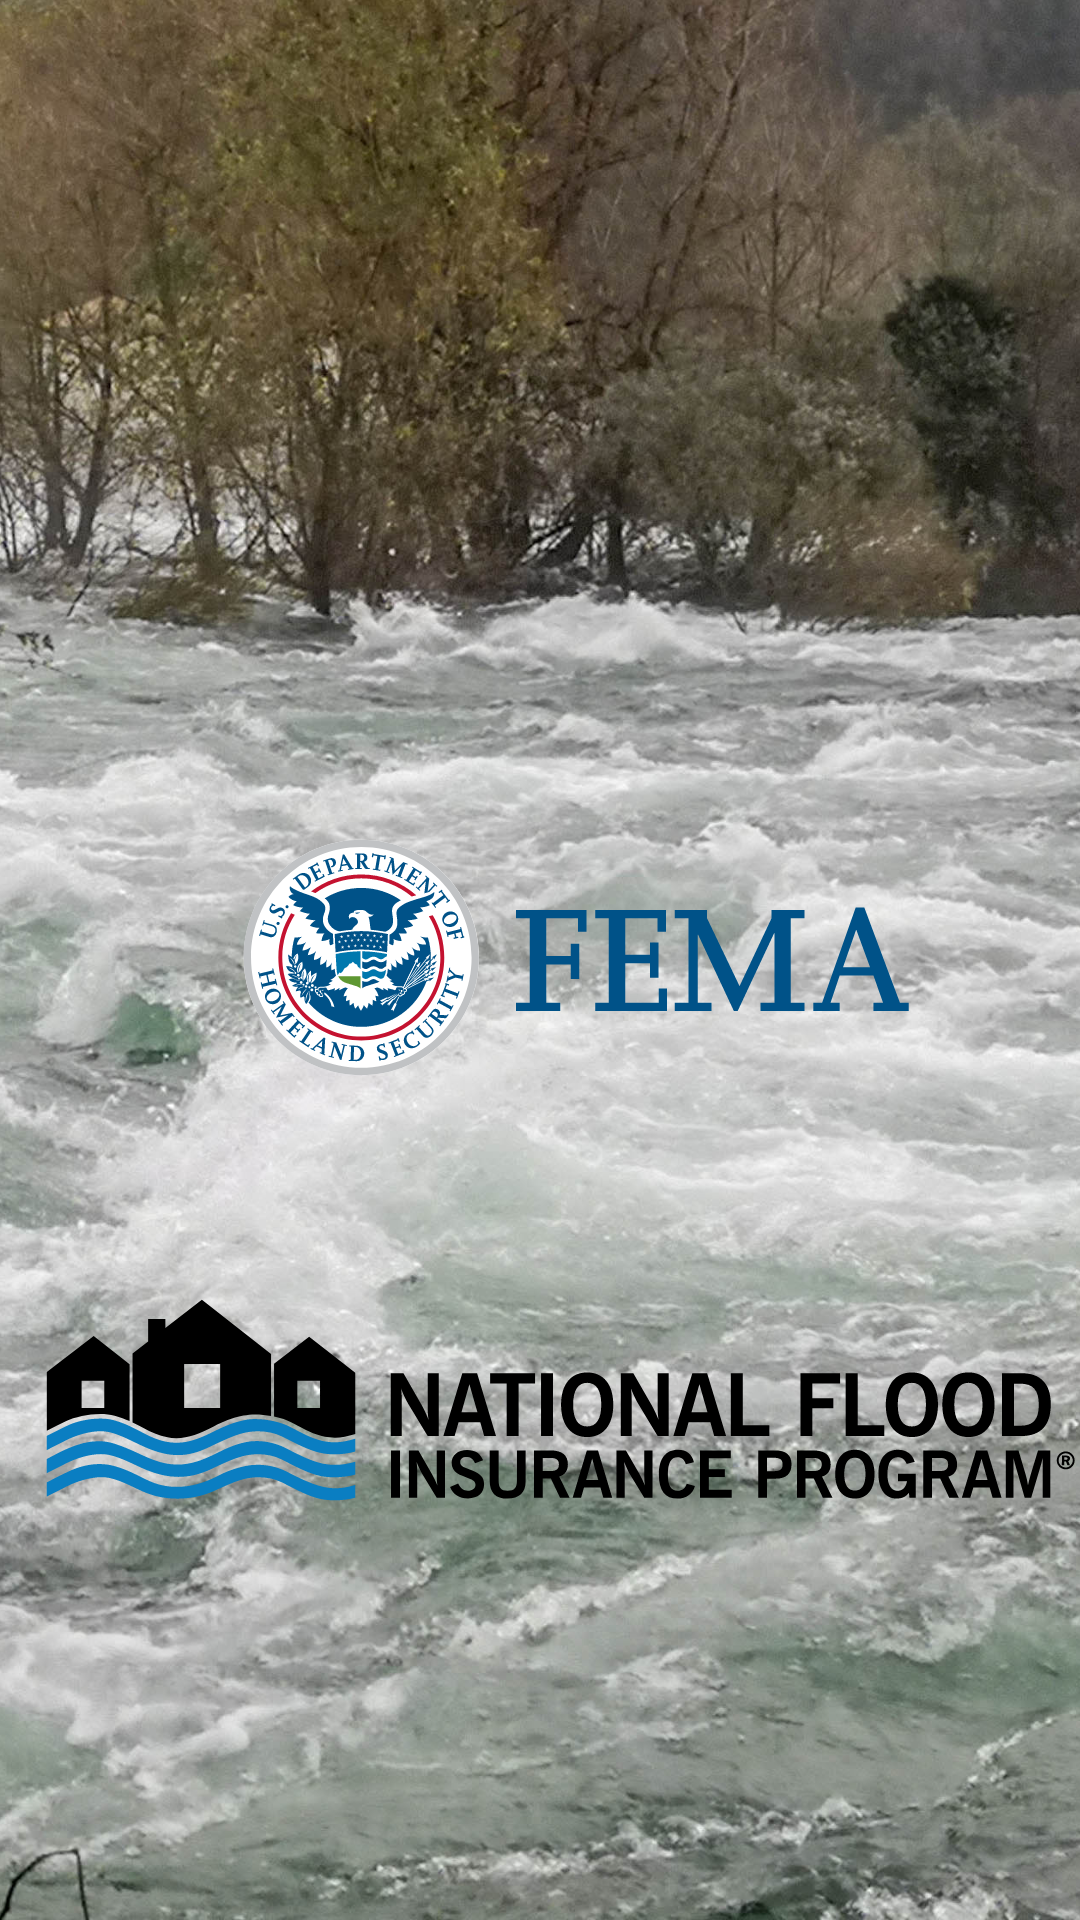 Image of flooding water is overlaid with FEMA logo and national flood insurance program logo.